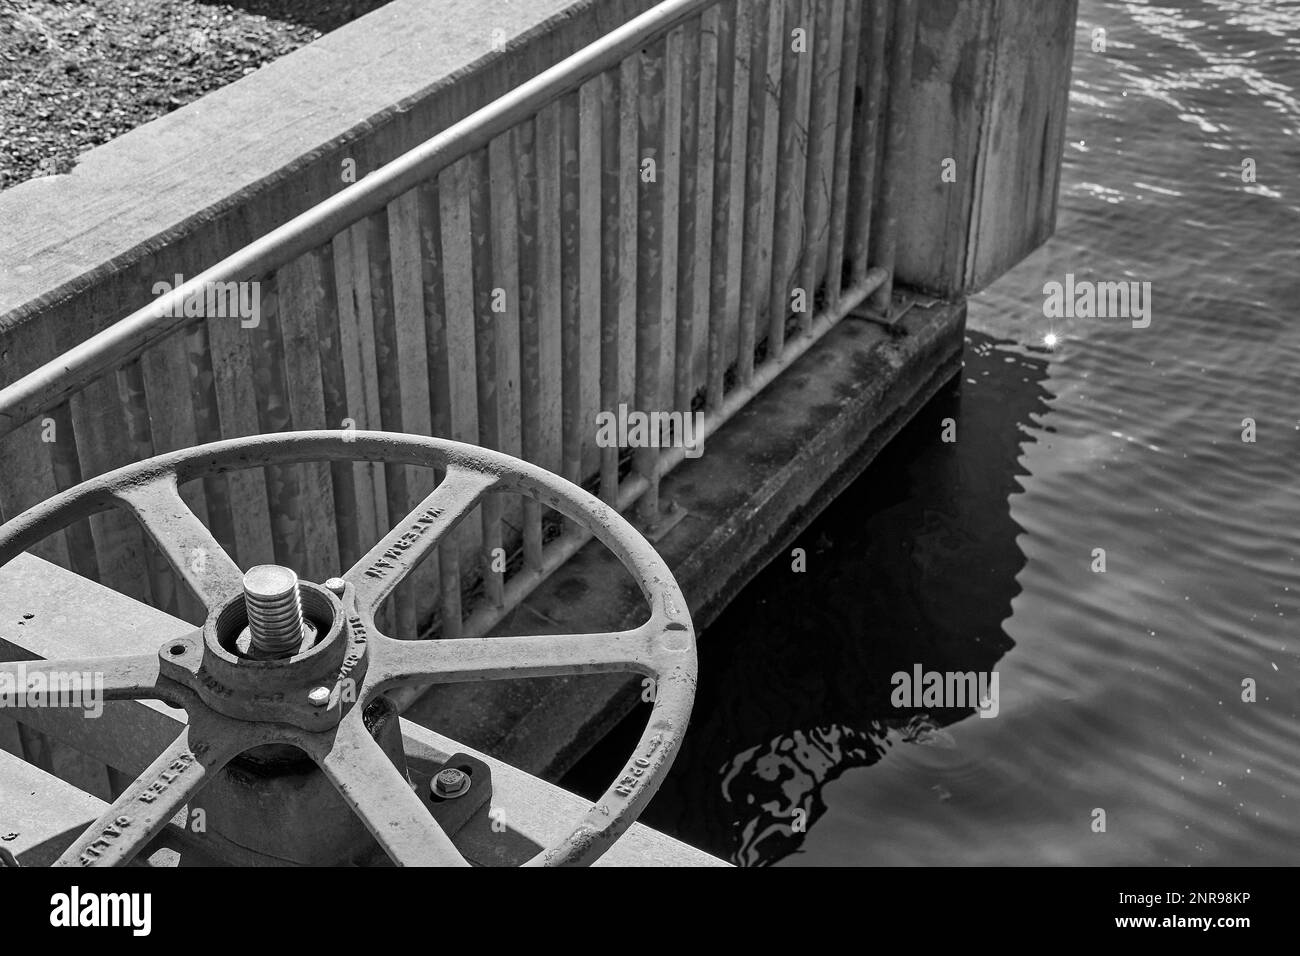 A valve controls a mill pond floodgate. Stock Photo